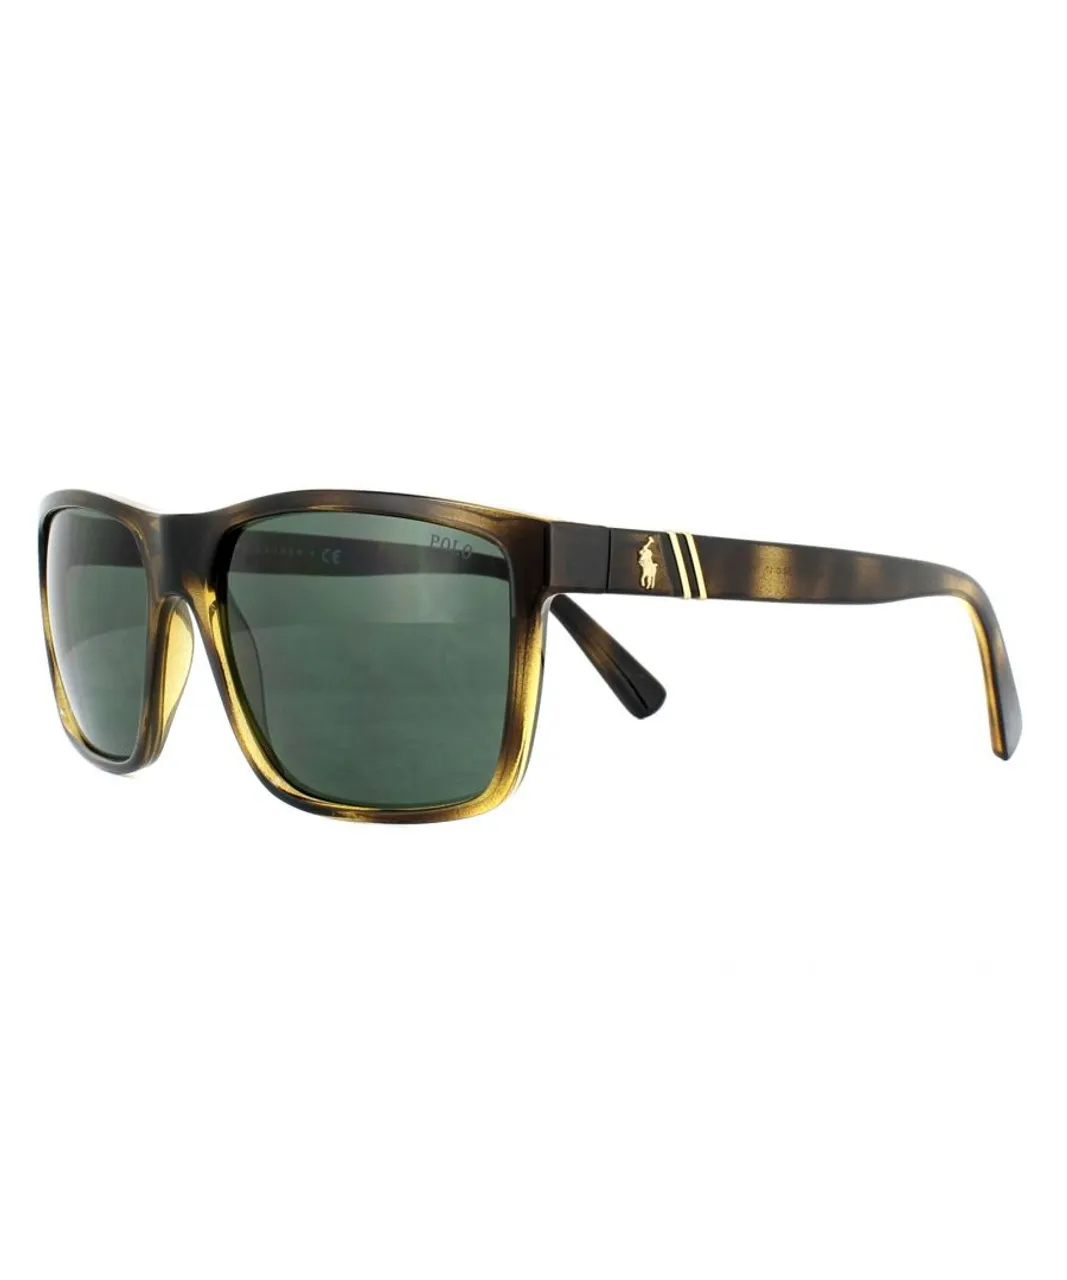 Polo Ralph Lauren Rectangle Mens Havana Green Sunglasses - Brown - One